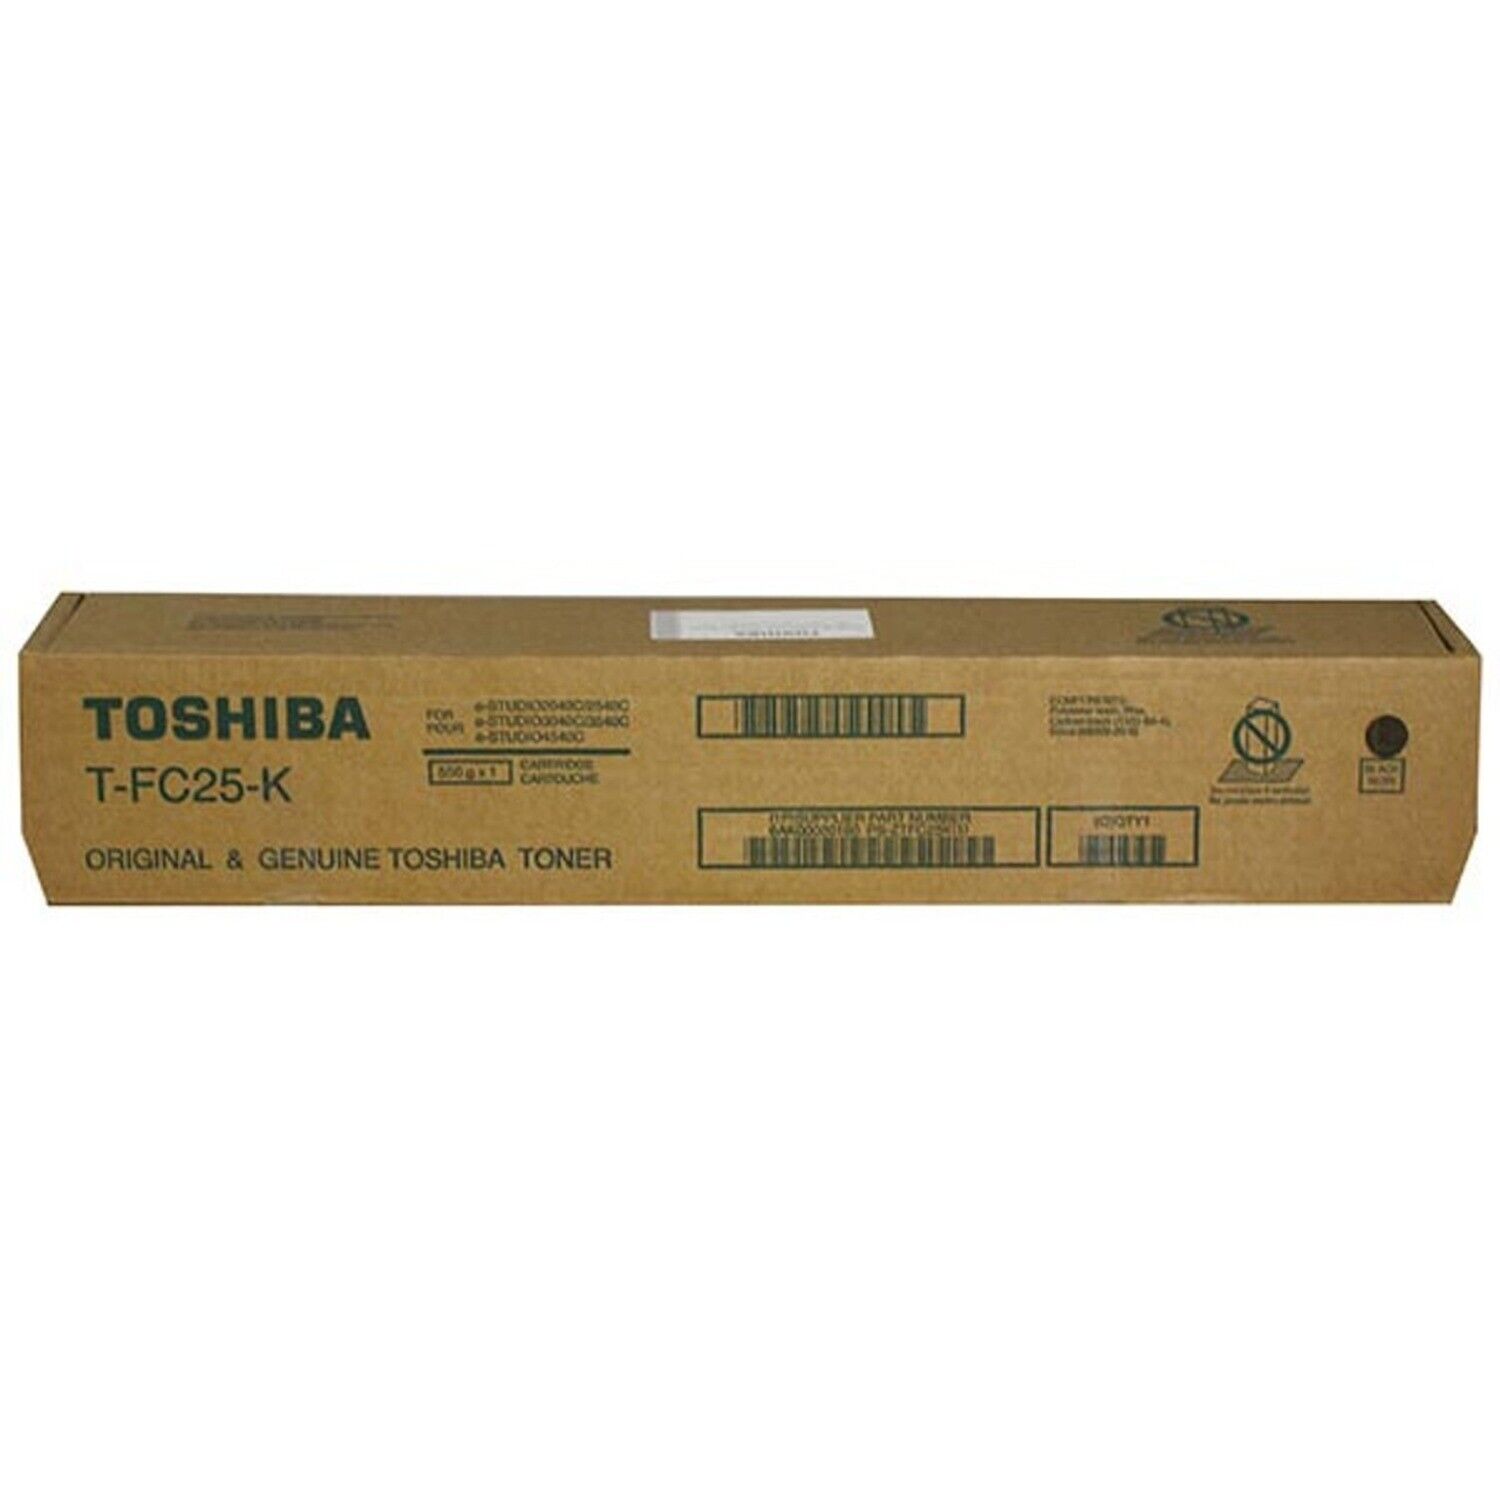 Genuine Toshiba T-FC25-K Black Toner Cartridge